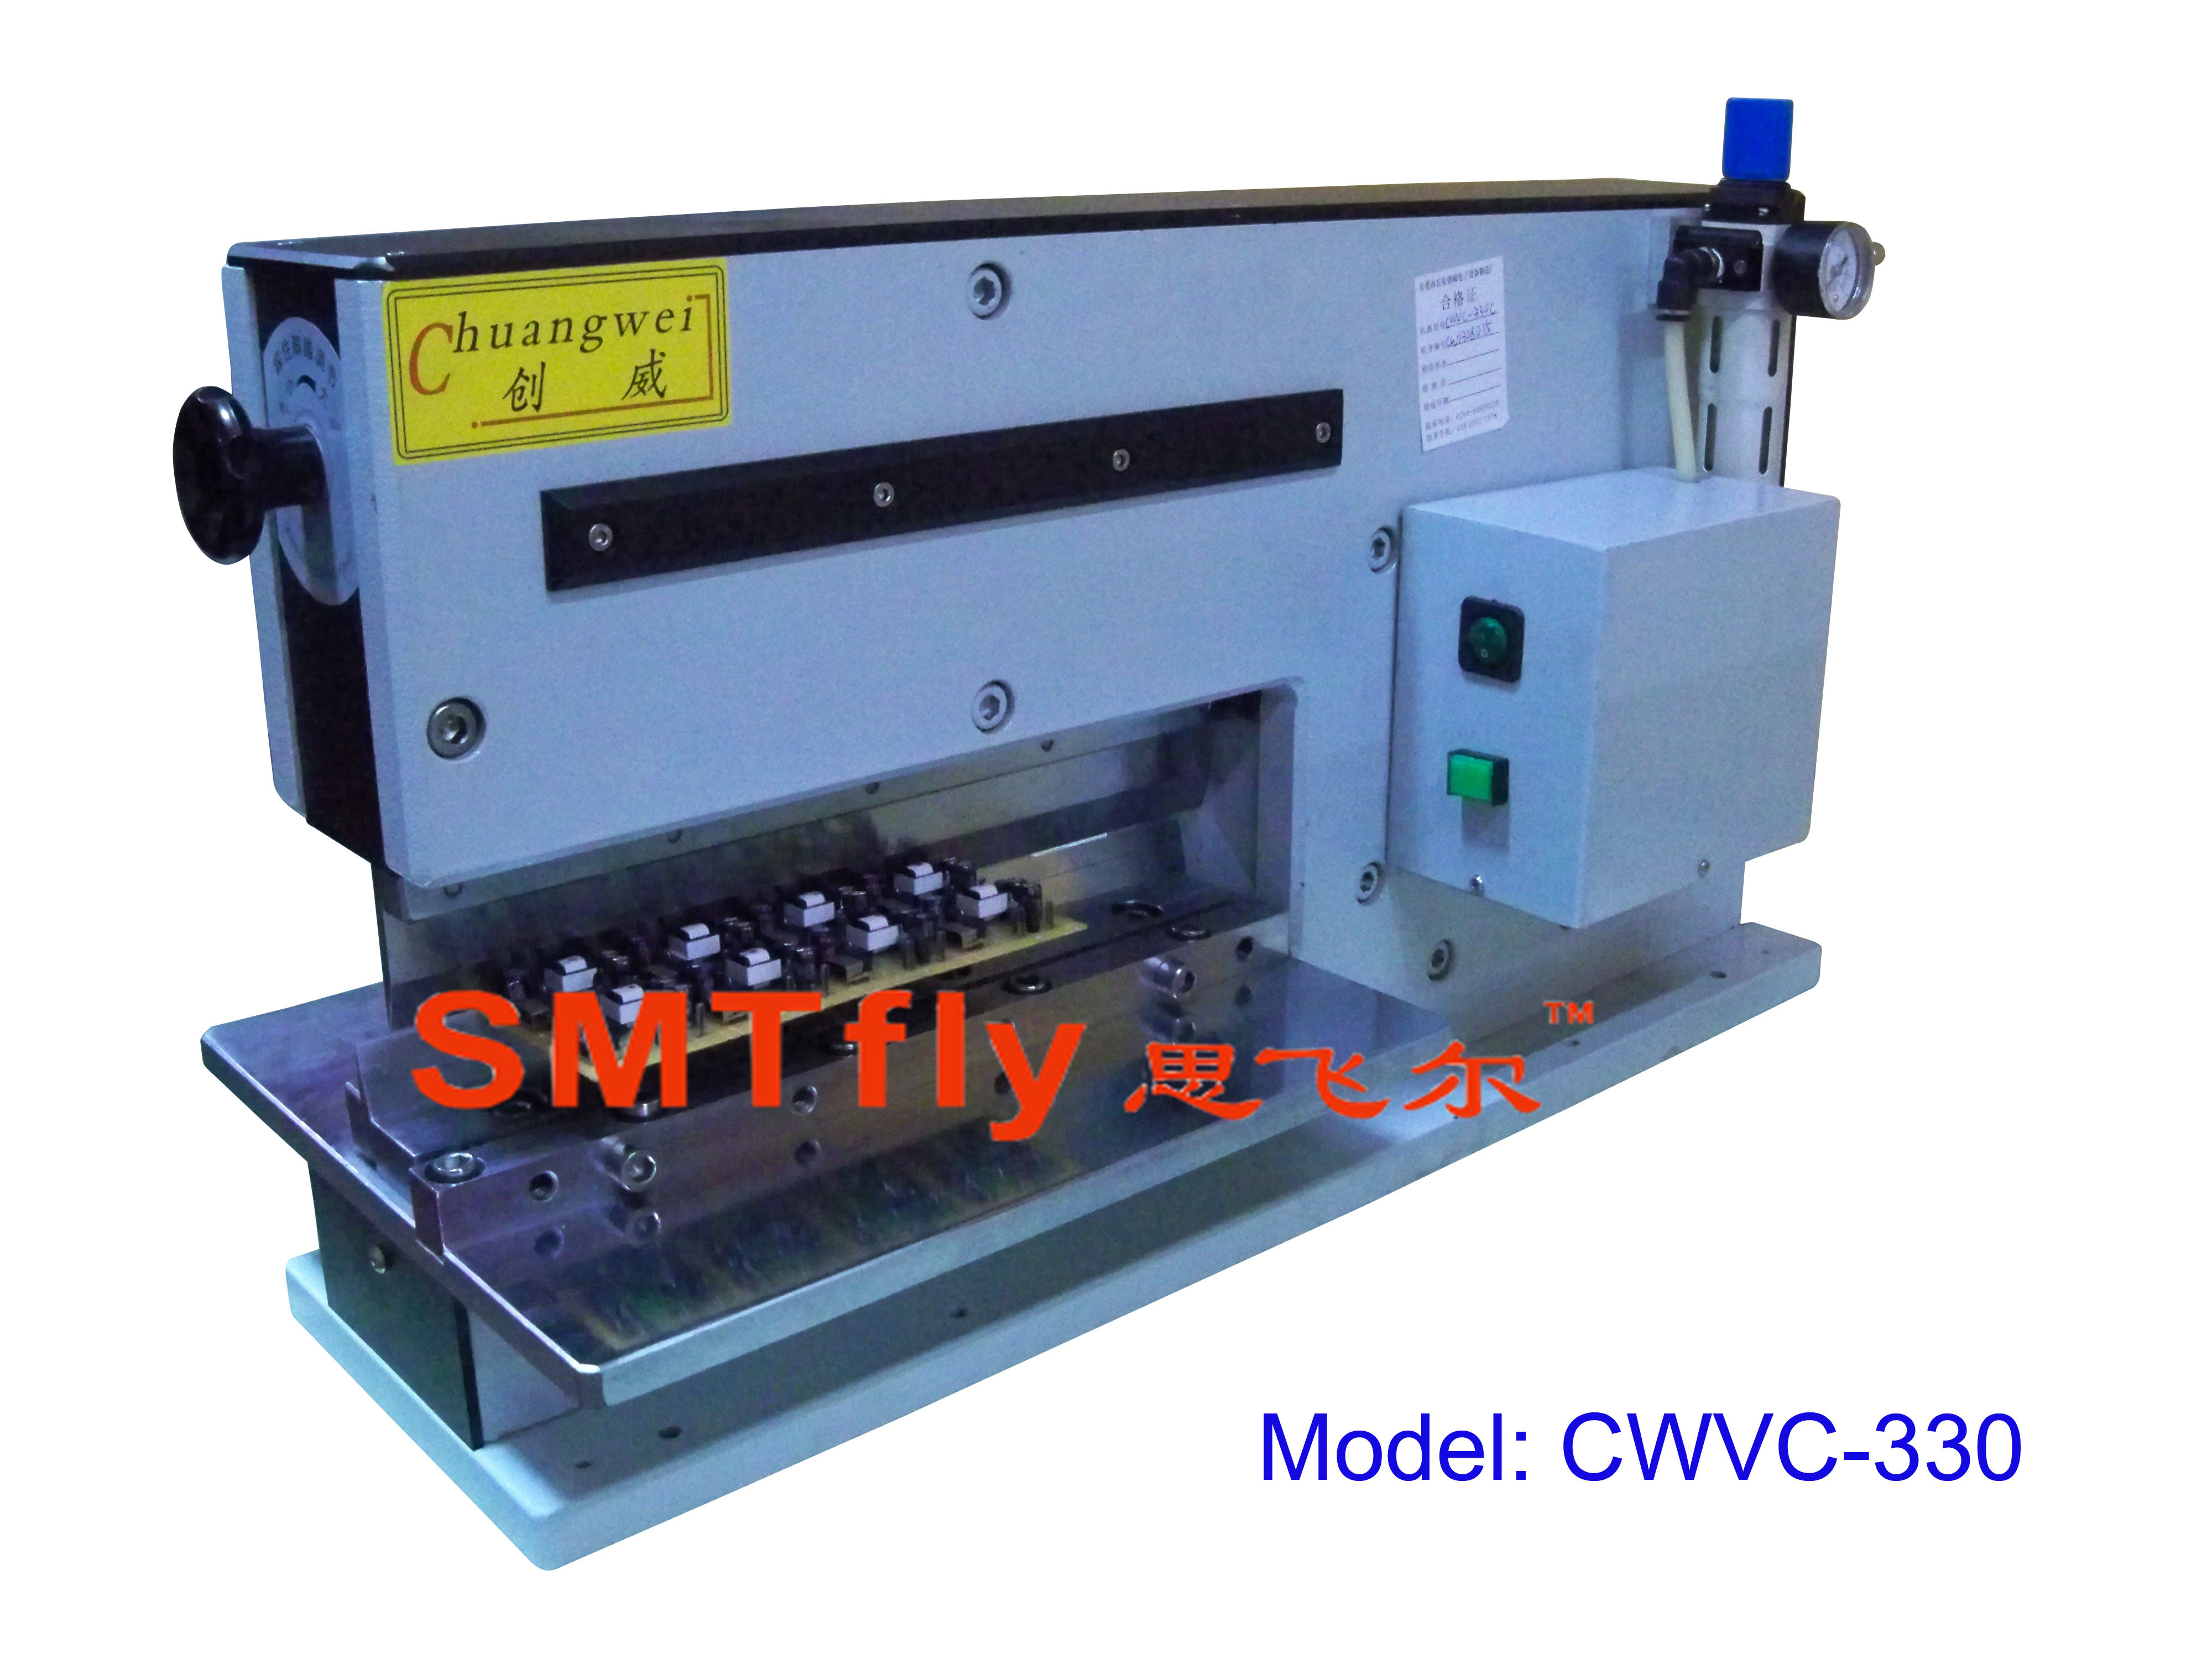 V Cut PCB Depaneling Equipment,SMTfly-330J